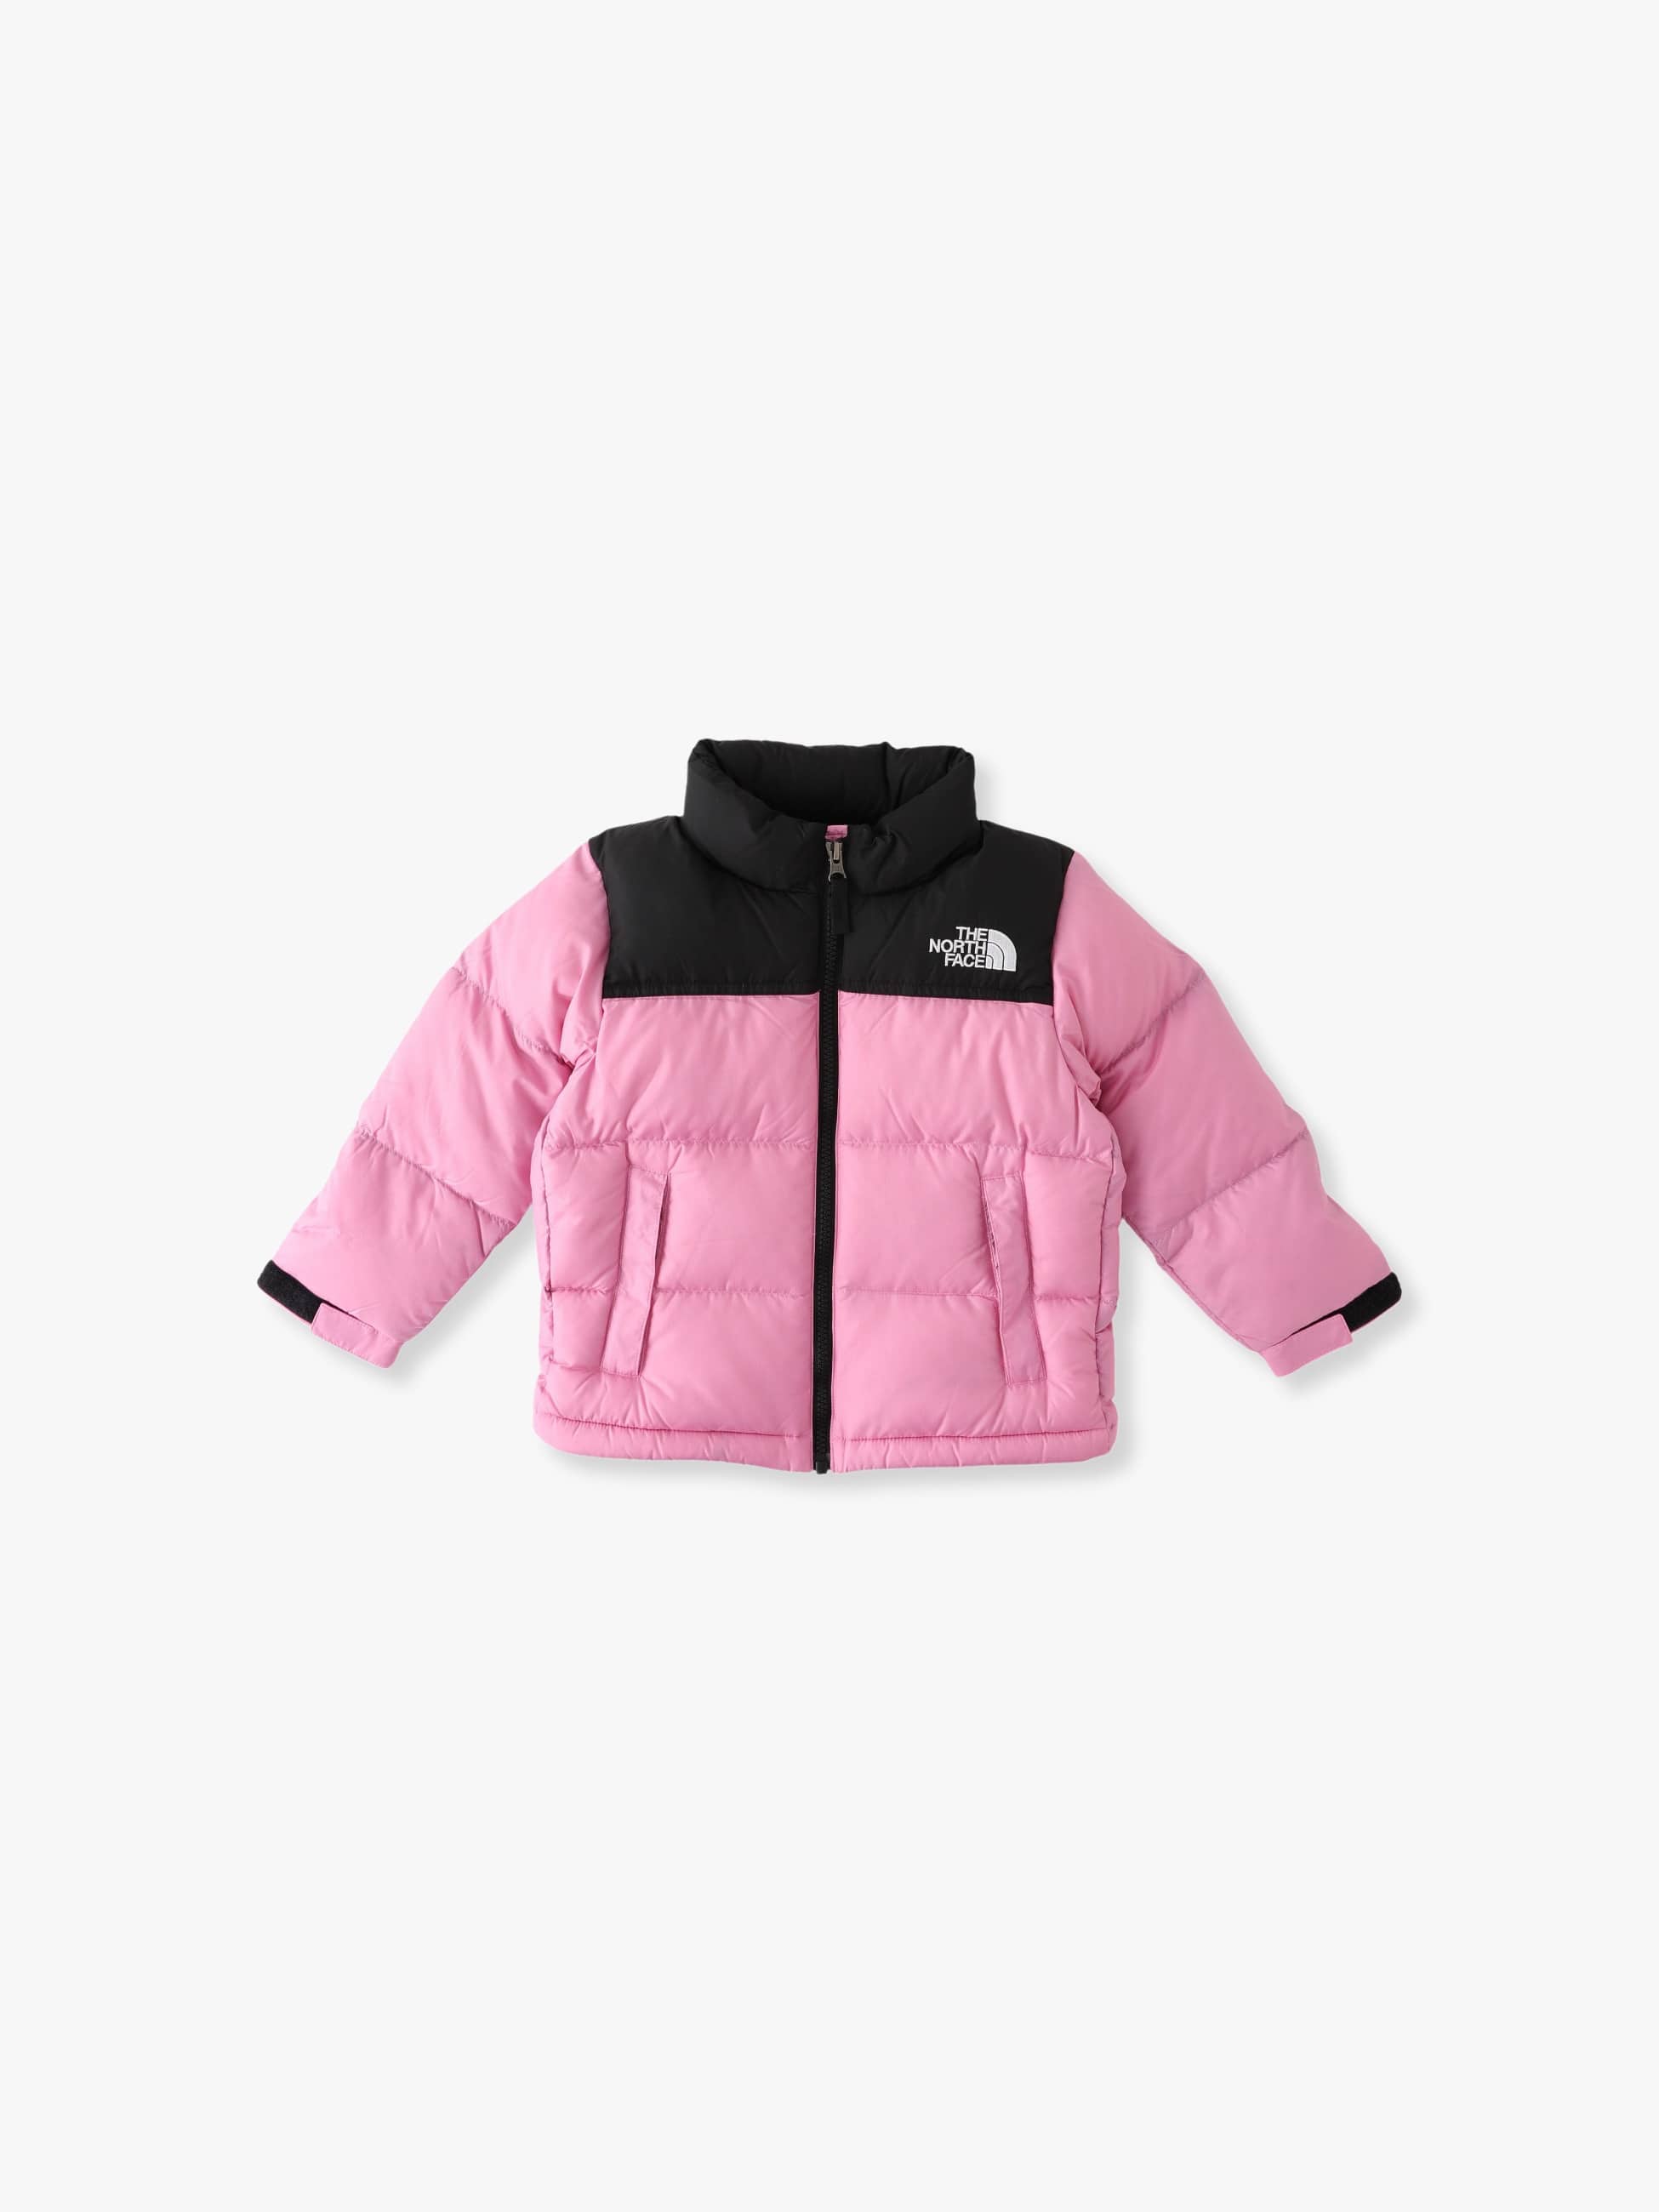 Nuptse Jacket (kids / khaki /pink) 詳細画像 pink 1